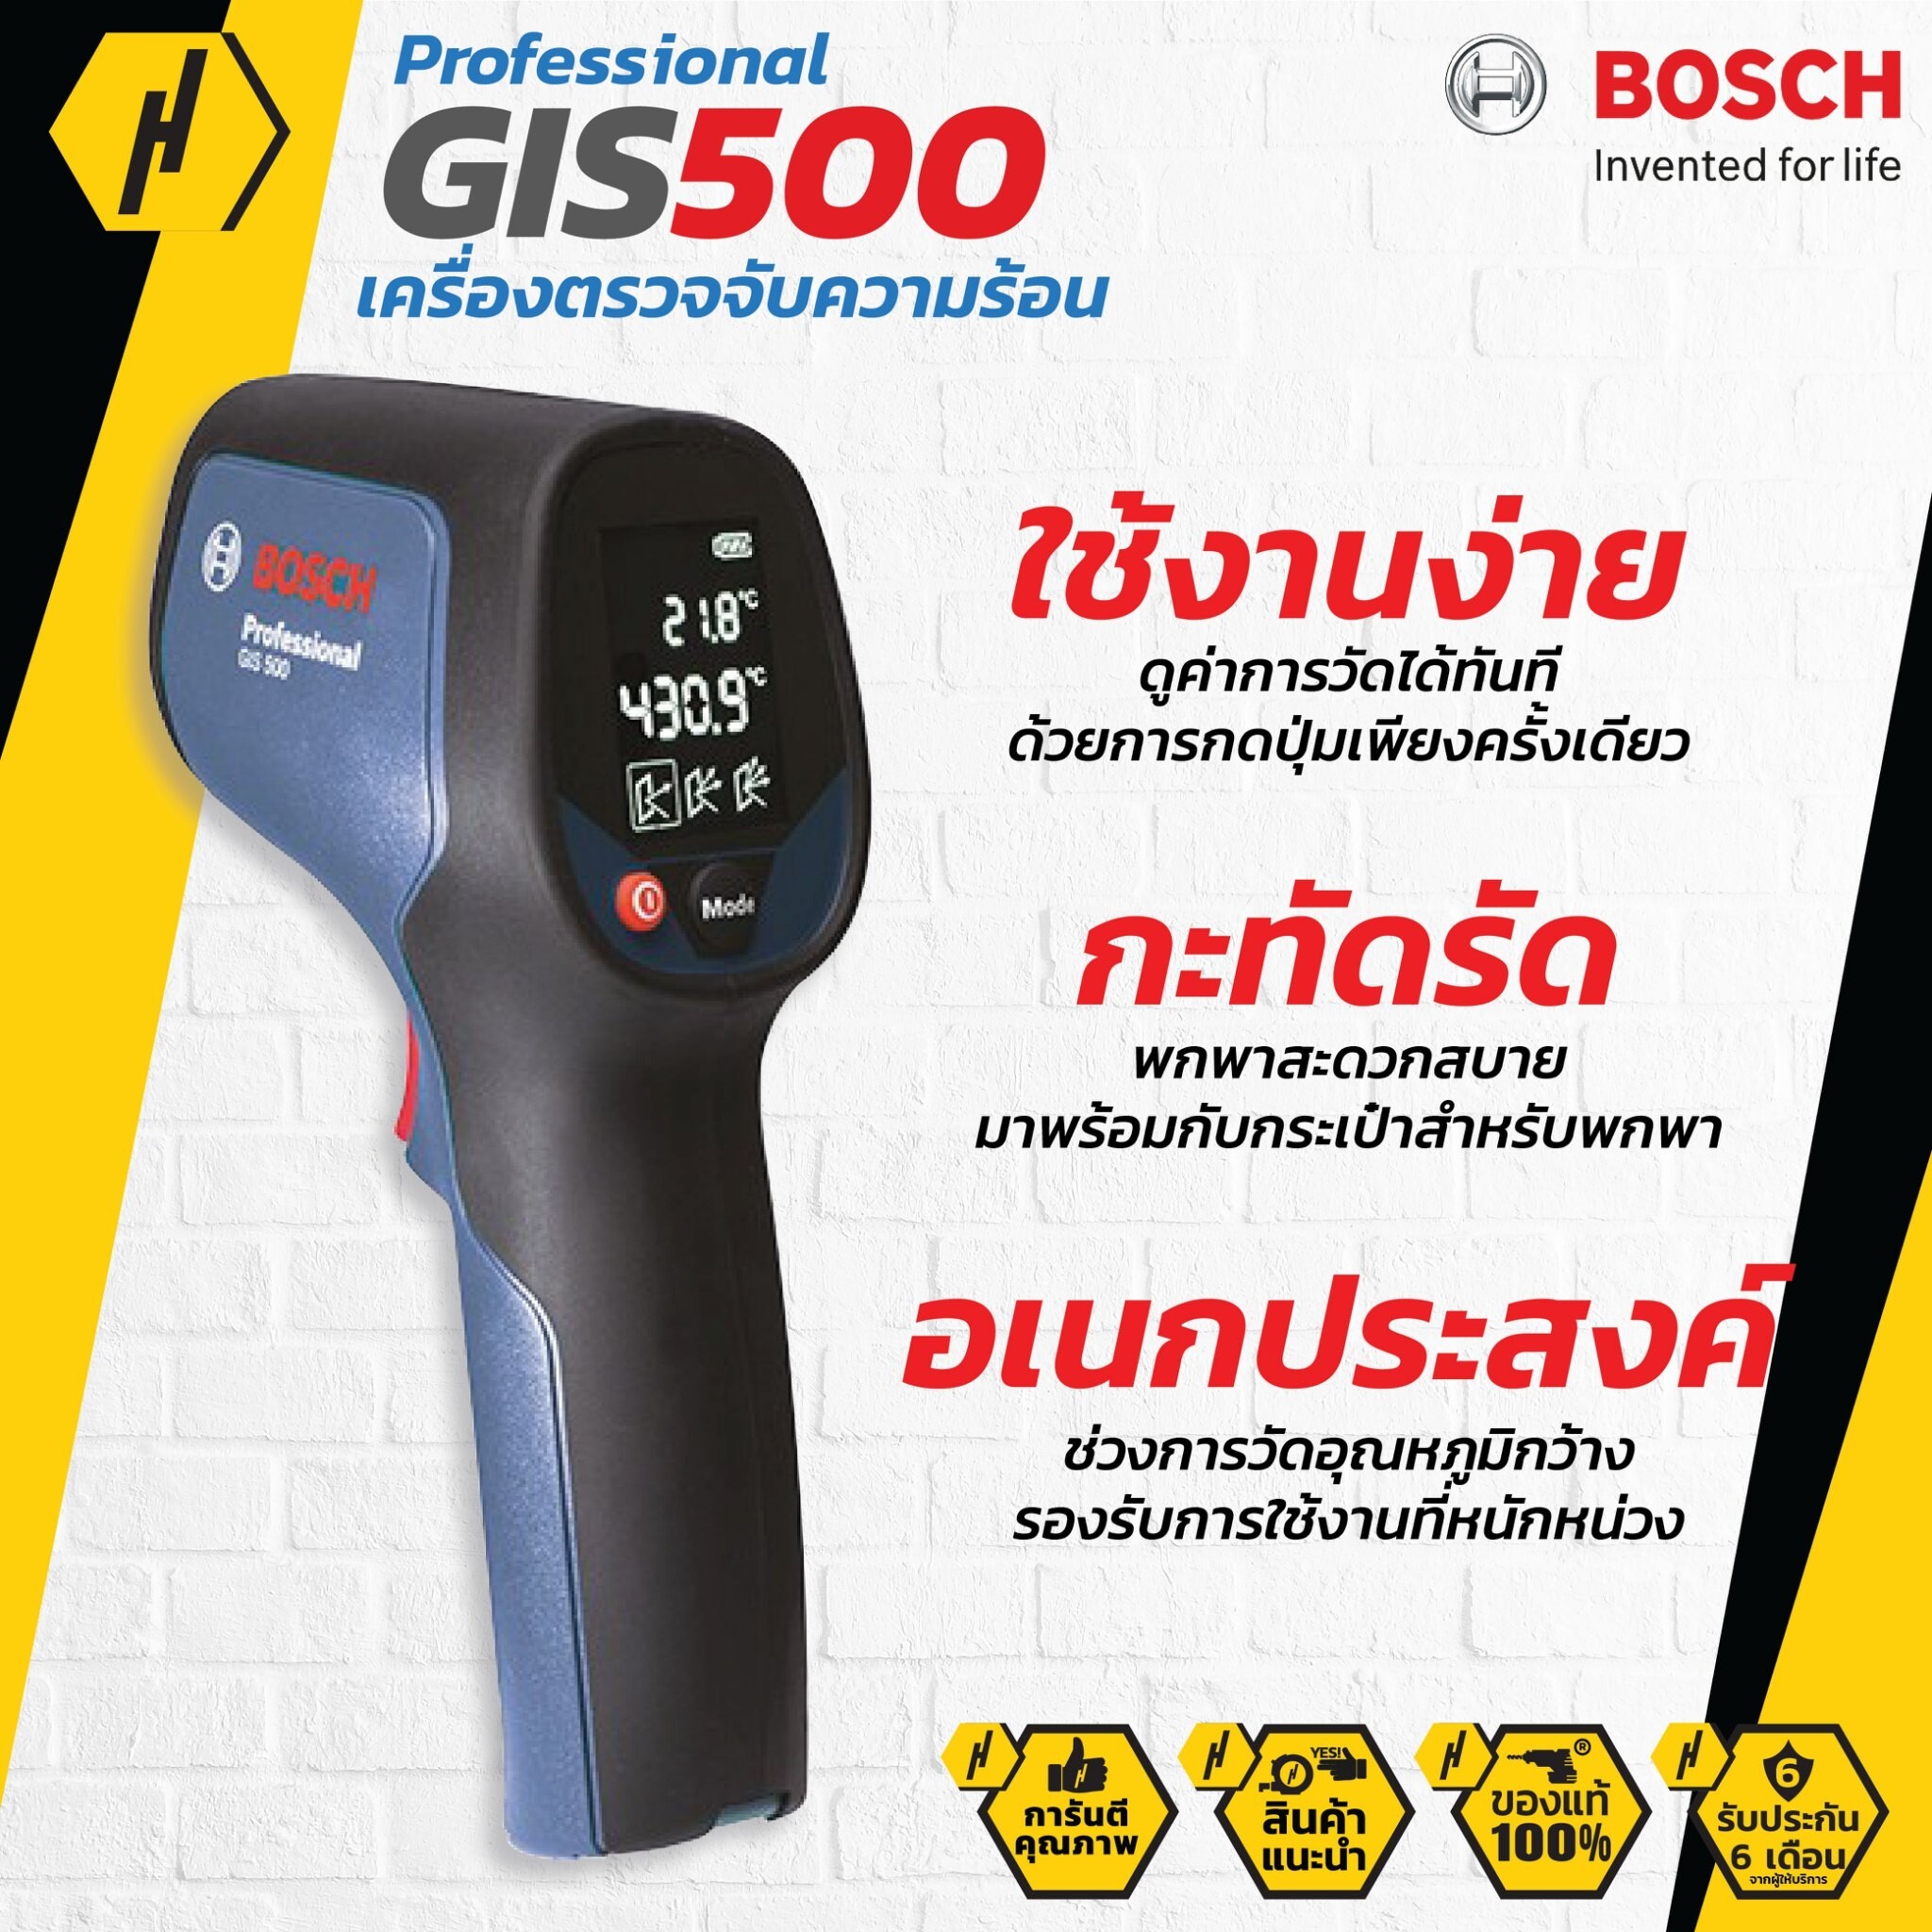 BOSCH GIS 500 เครื่องตรวจจับความร้อน GIS 500 เครื่องวัดอุณหภูมิ เพียงกดปุ่มก็ใช้งานได้ทันที